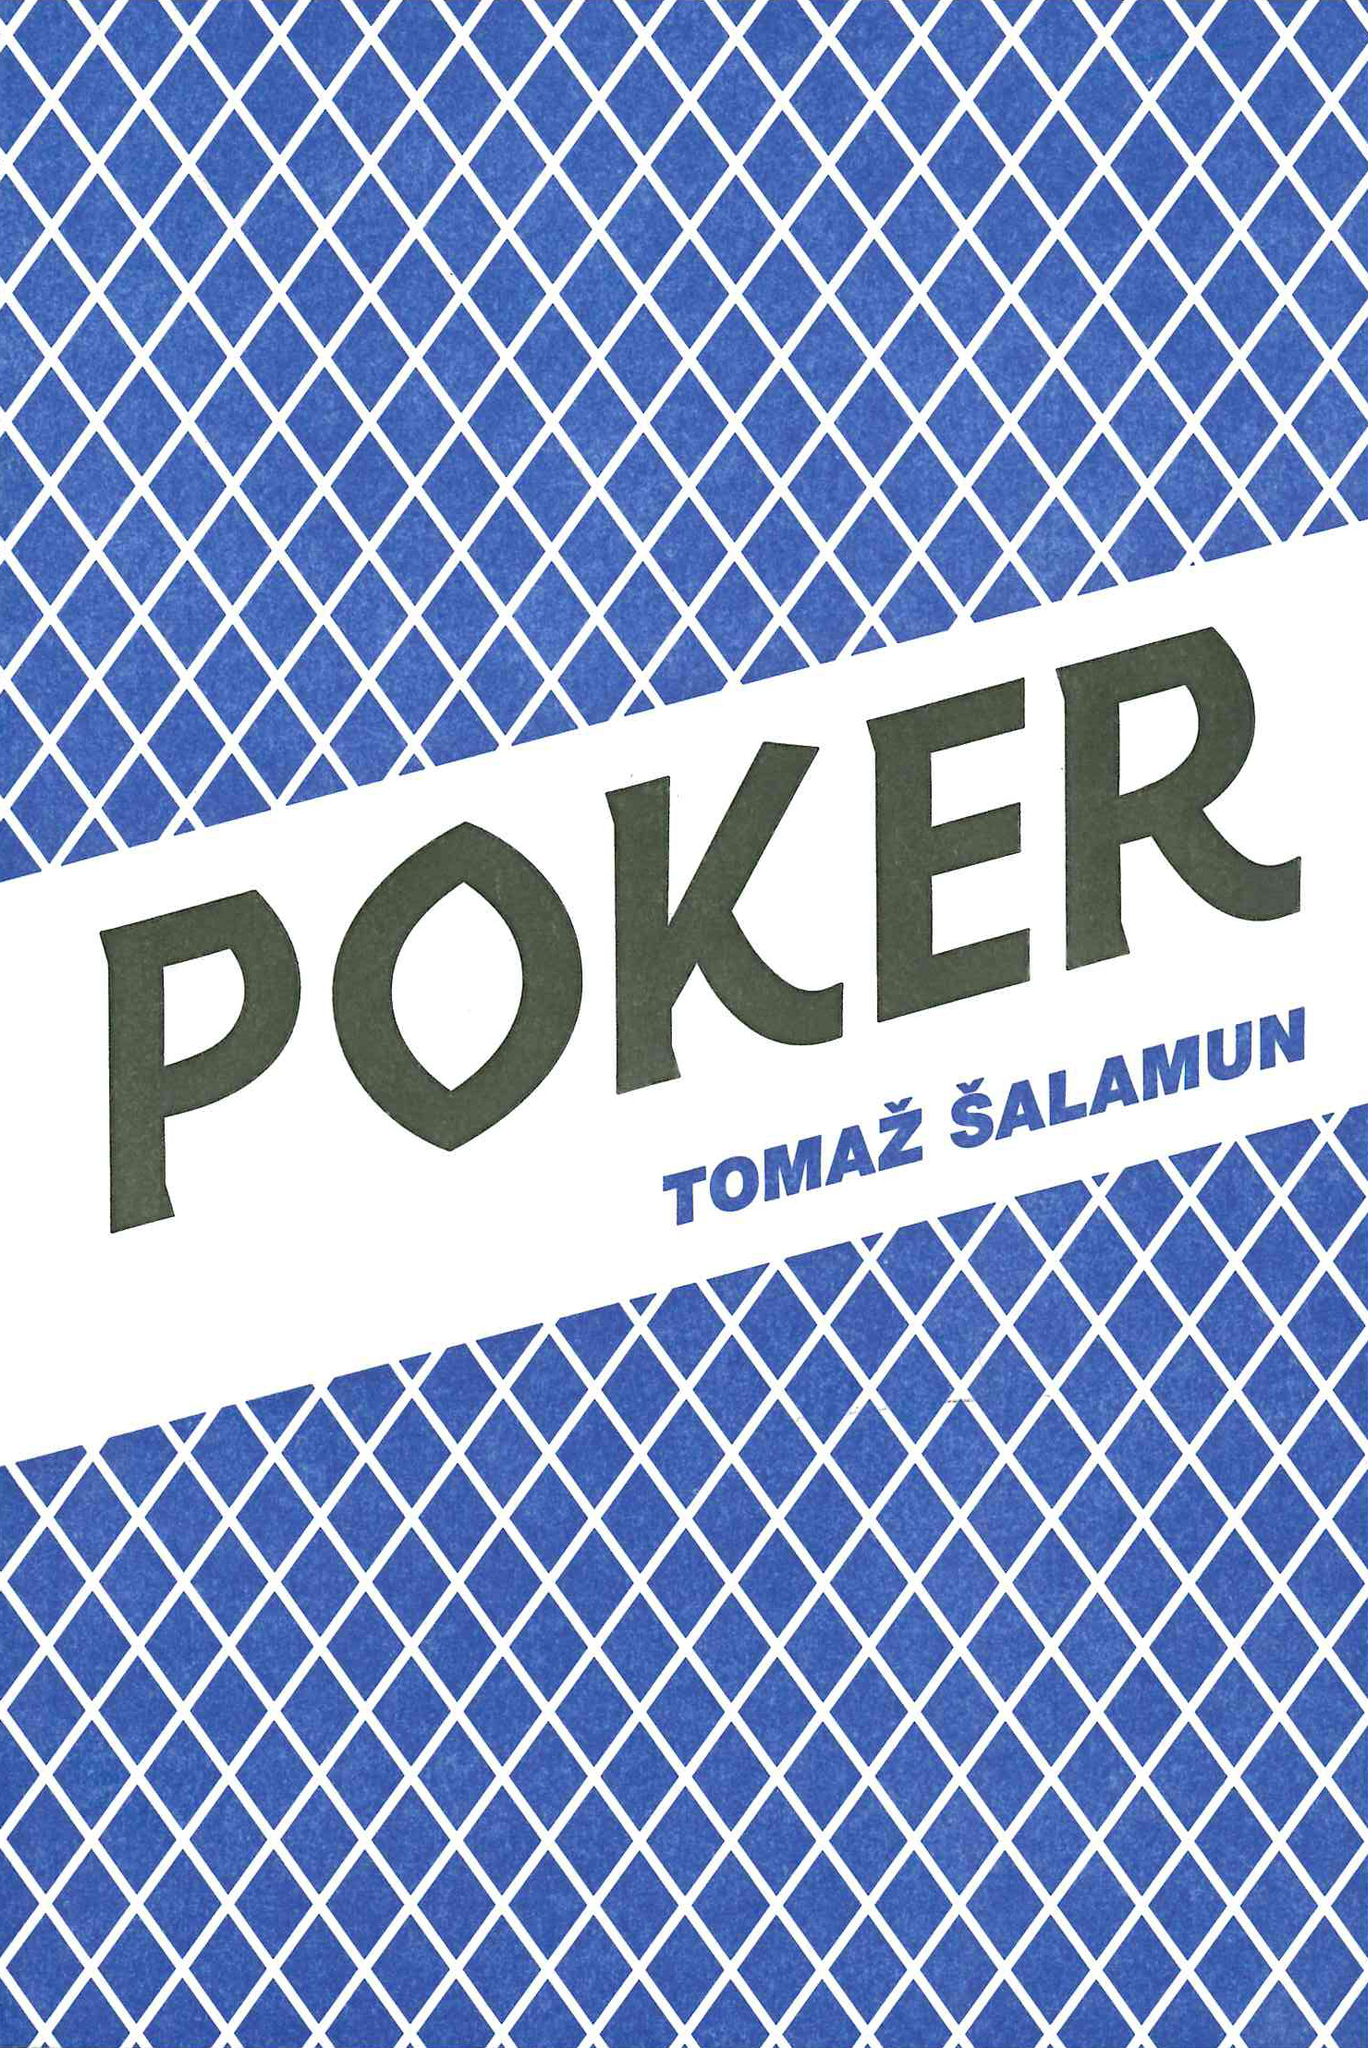 Poker (2nd Edition)